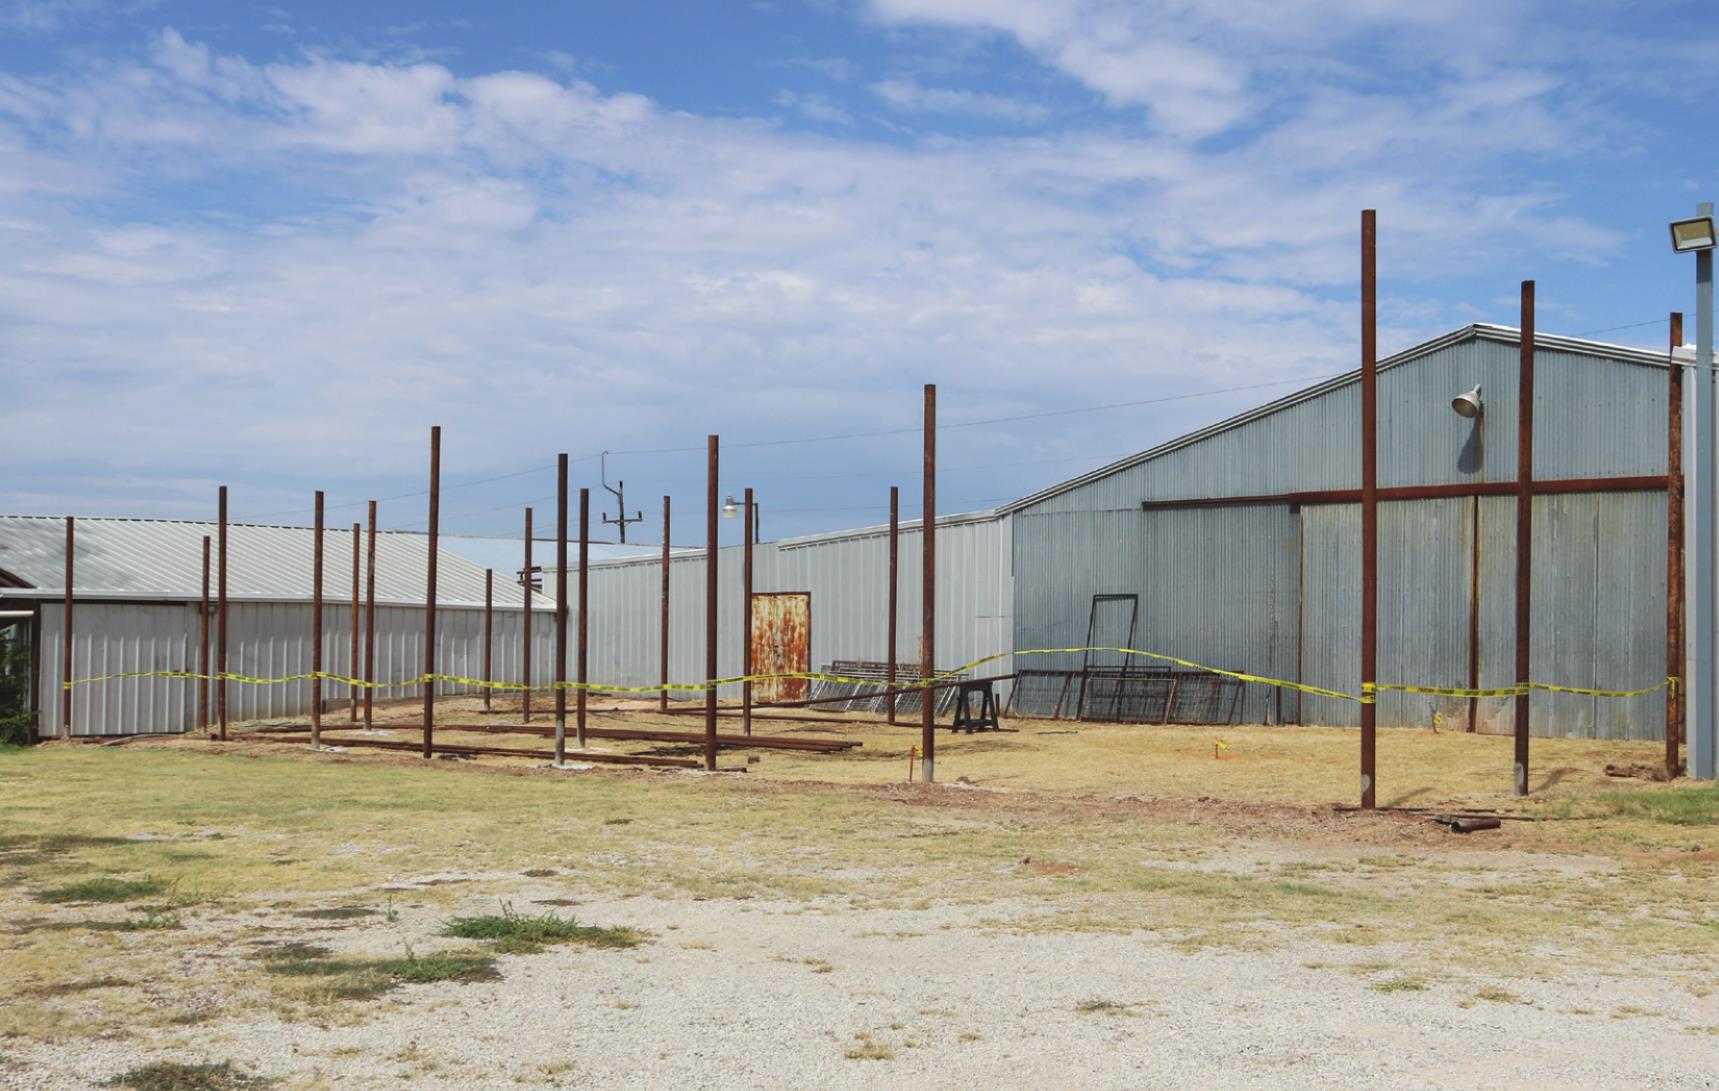 Archer County Junior Livestock Show Barn project making progress